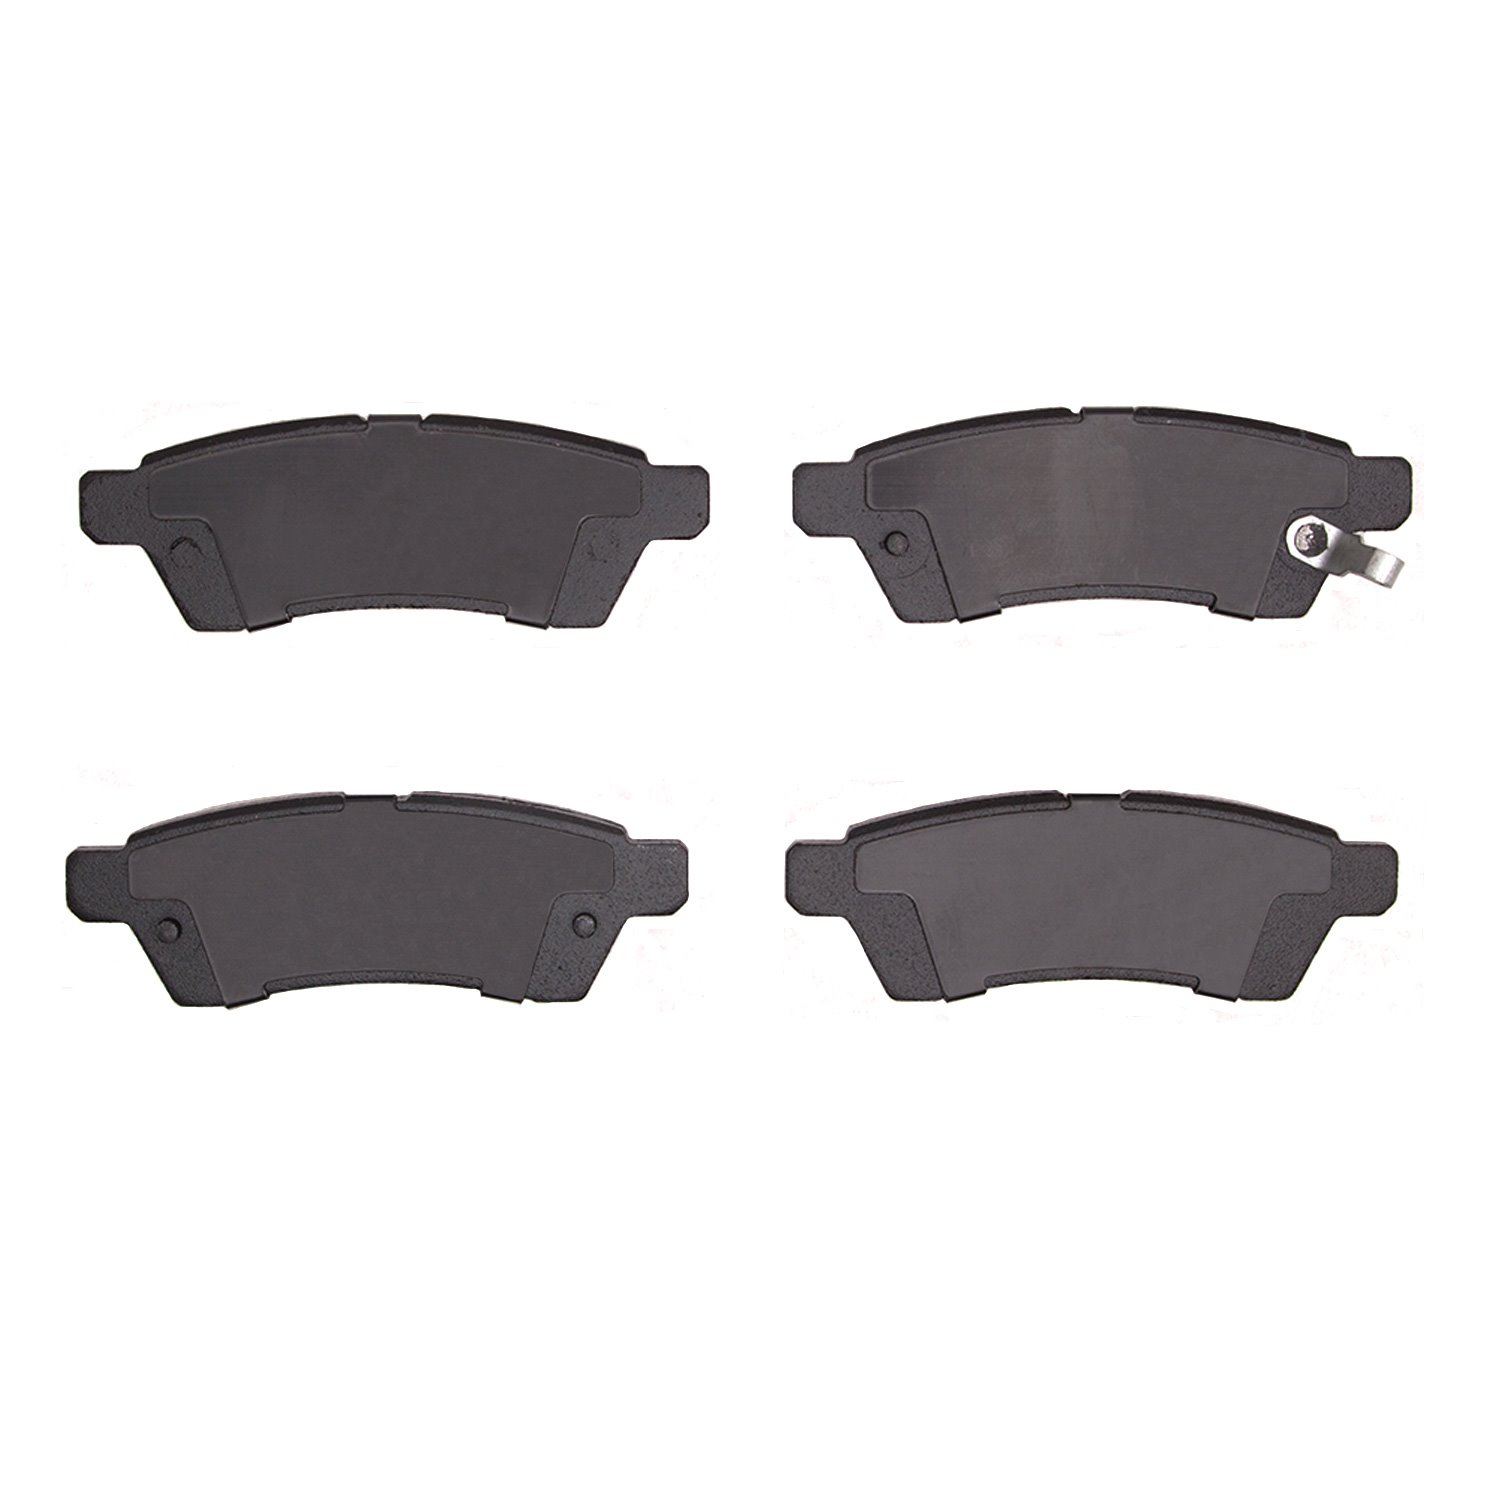 1311-1100-00 3000-Series Semi-Metallic Brake Pads, Fits Select Multiple Makes/Models, Position: Rear